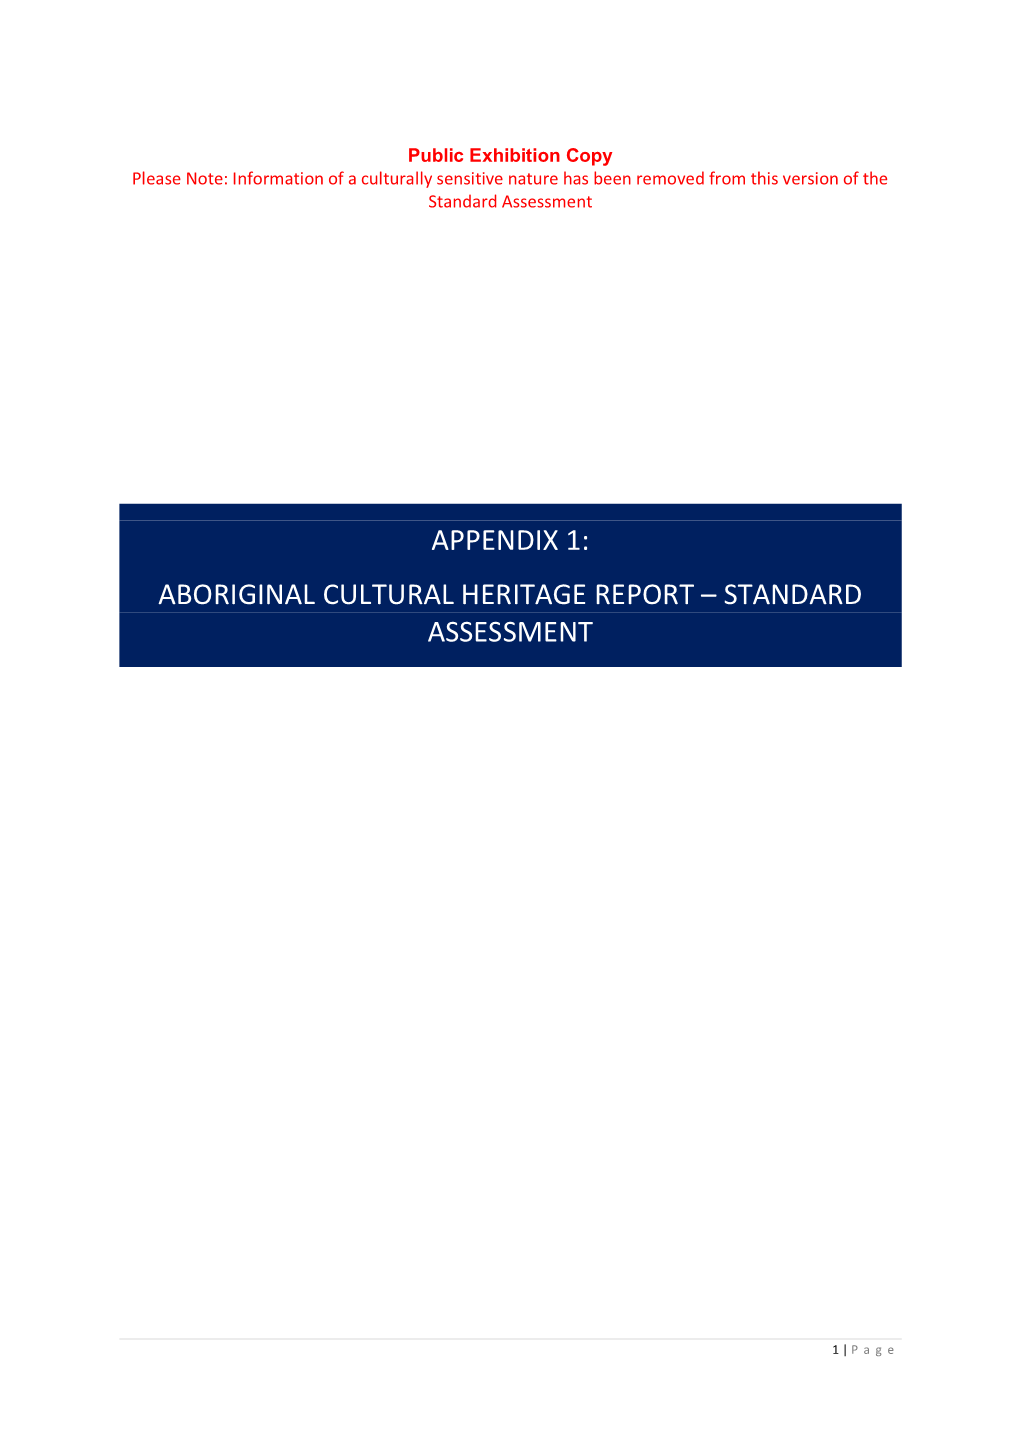 Appendix 1: Aboriginal Cultural Heritage Report – Standard Assessment